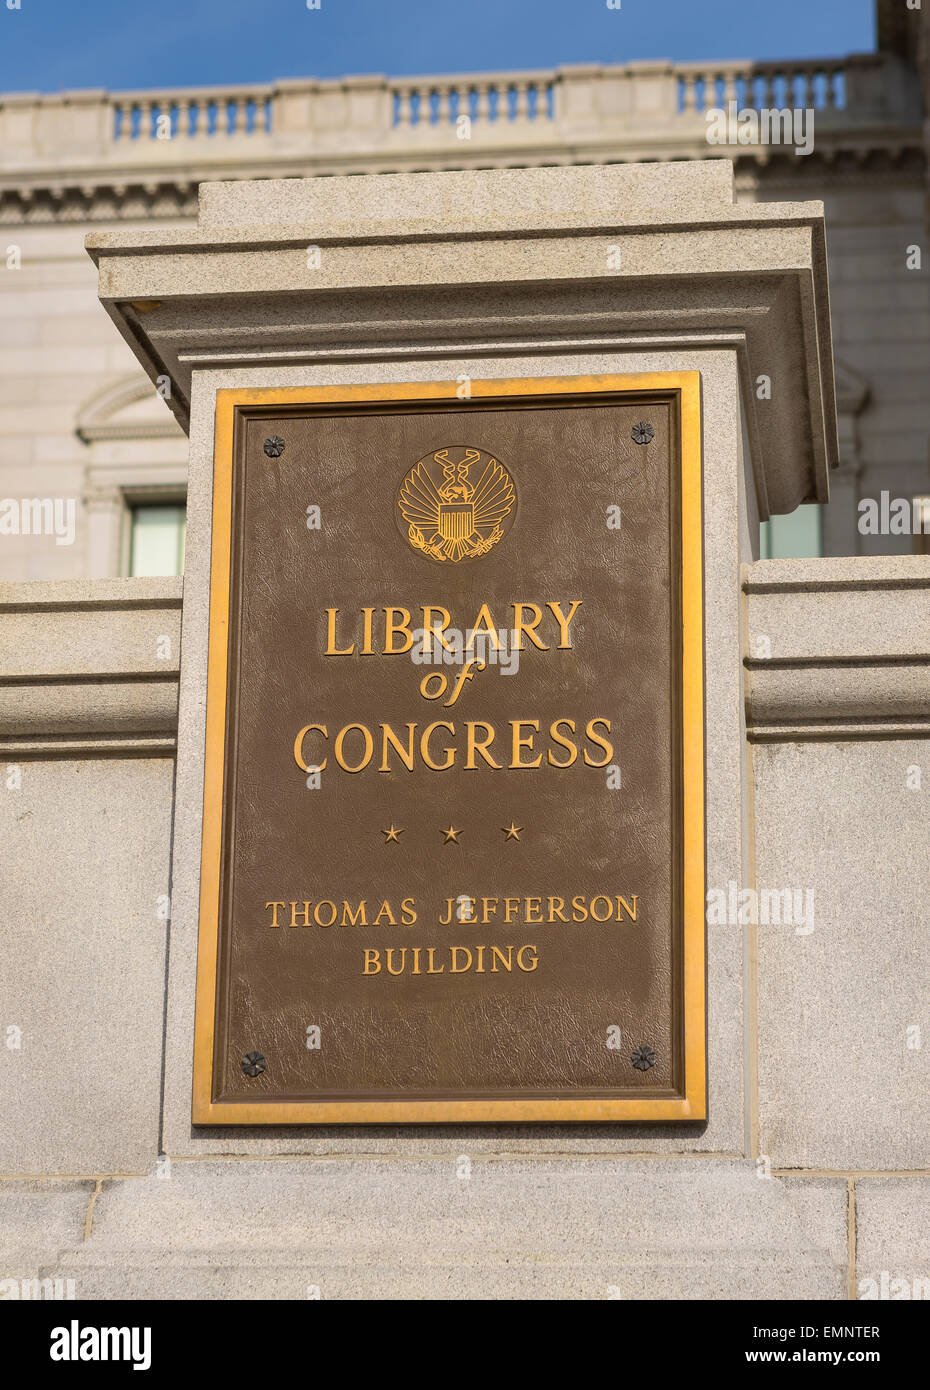 WASHINGTON, DC, USA - The United States Library of Congress, Thomas Jefferson Building plaque. Stock Photo